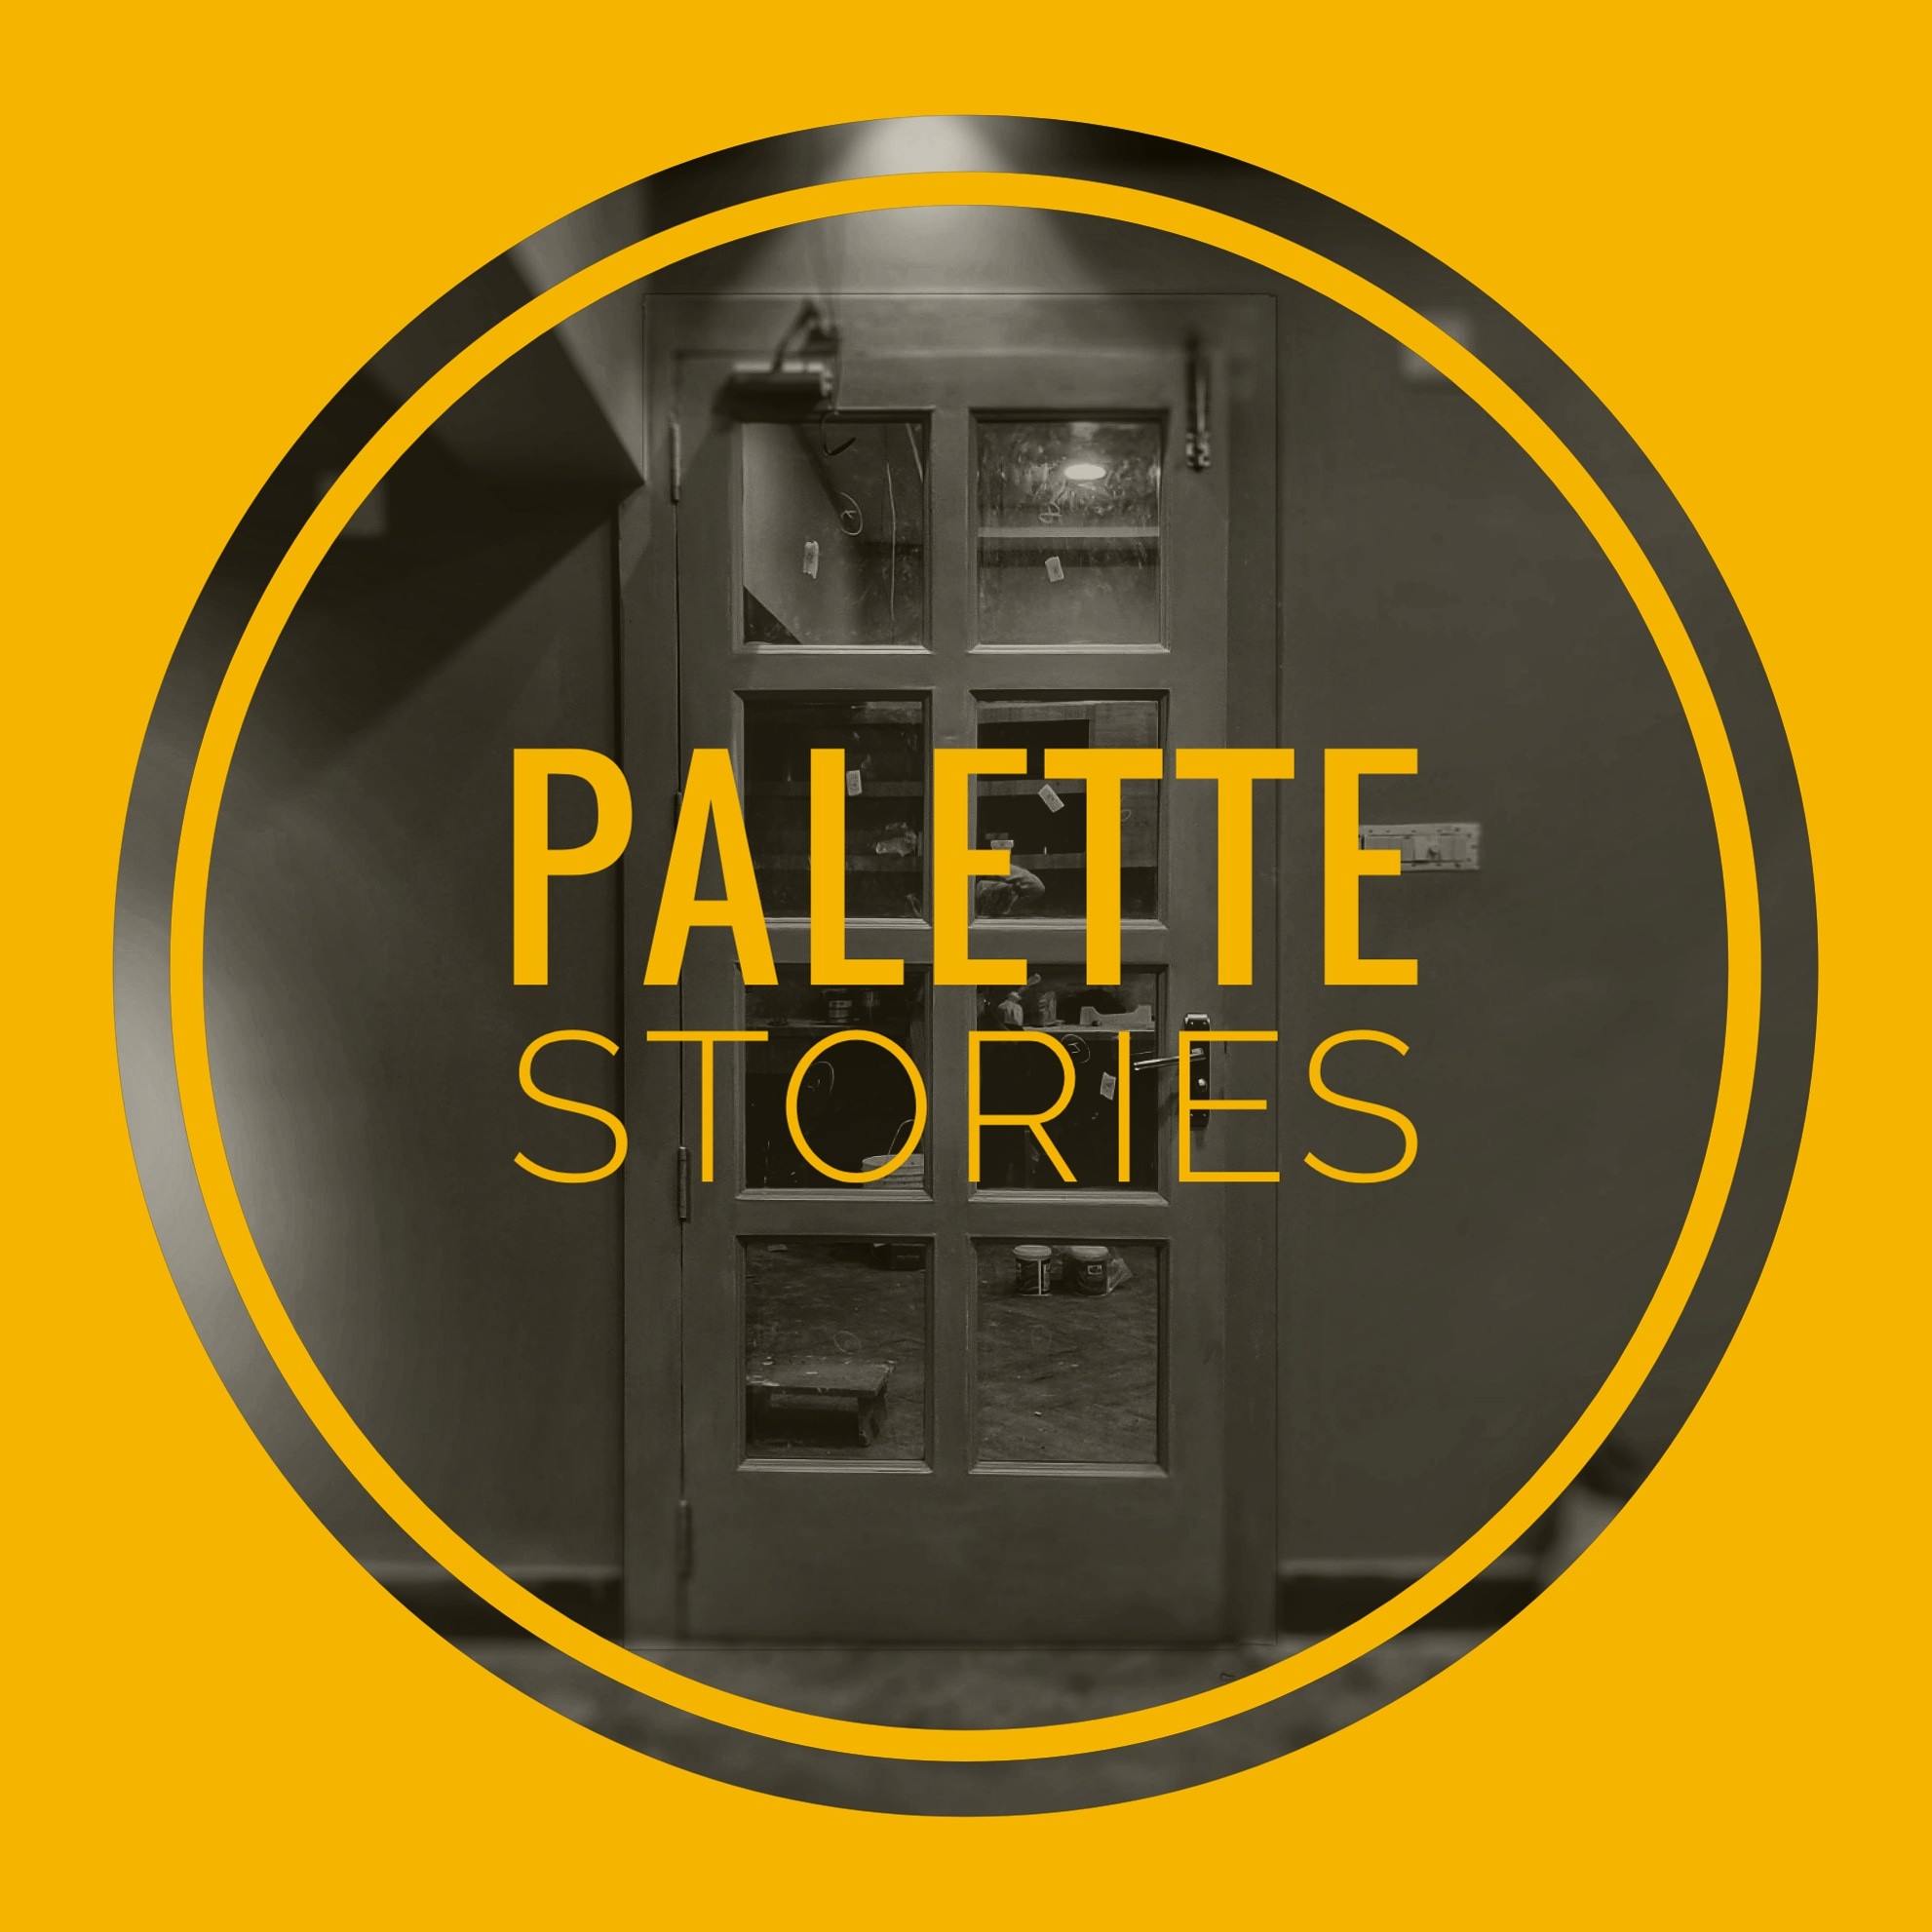 Palette stories|Architect|Professional Services